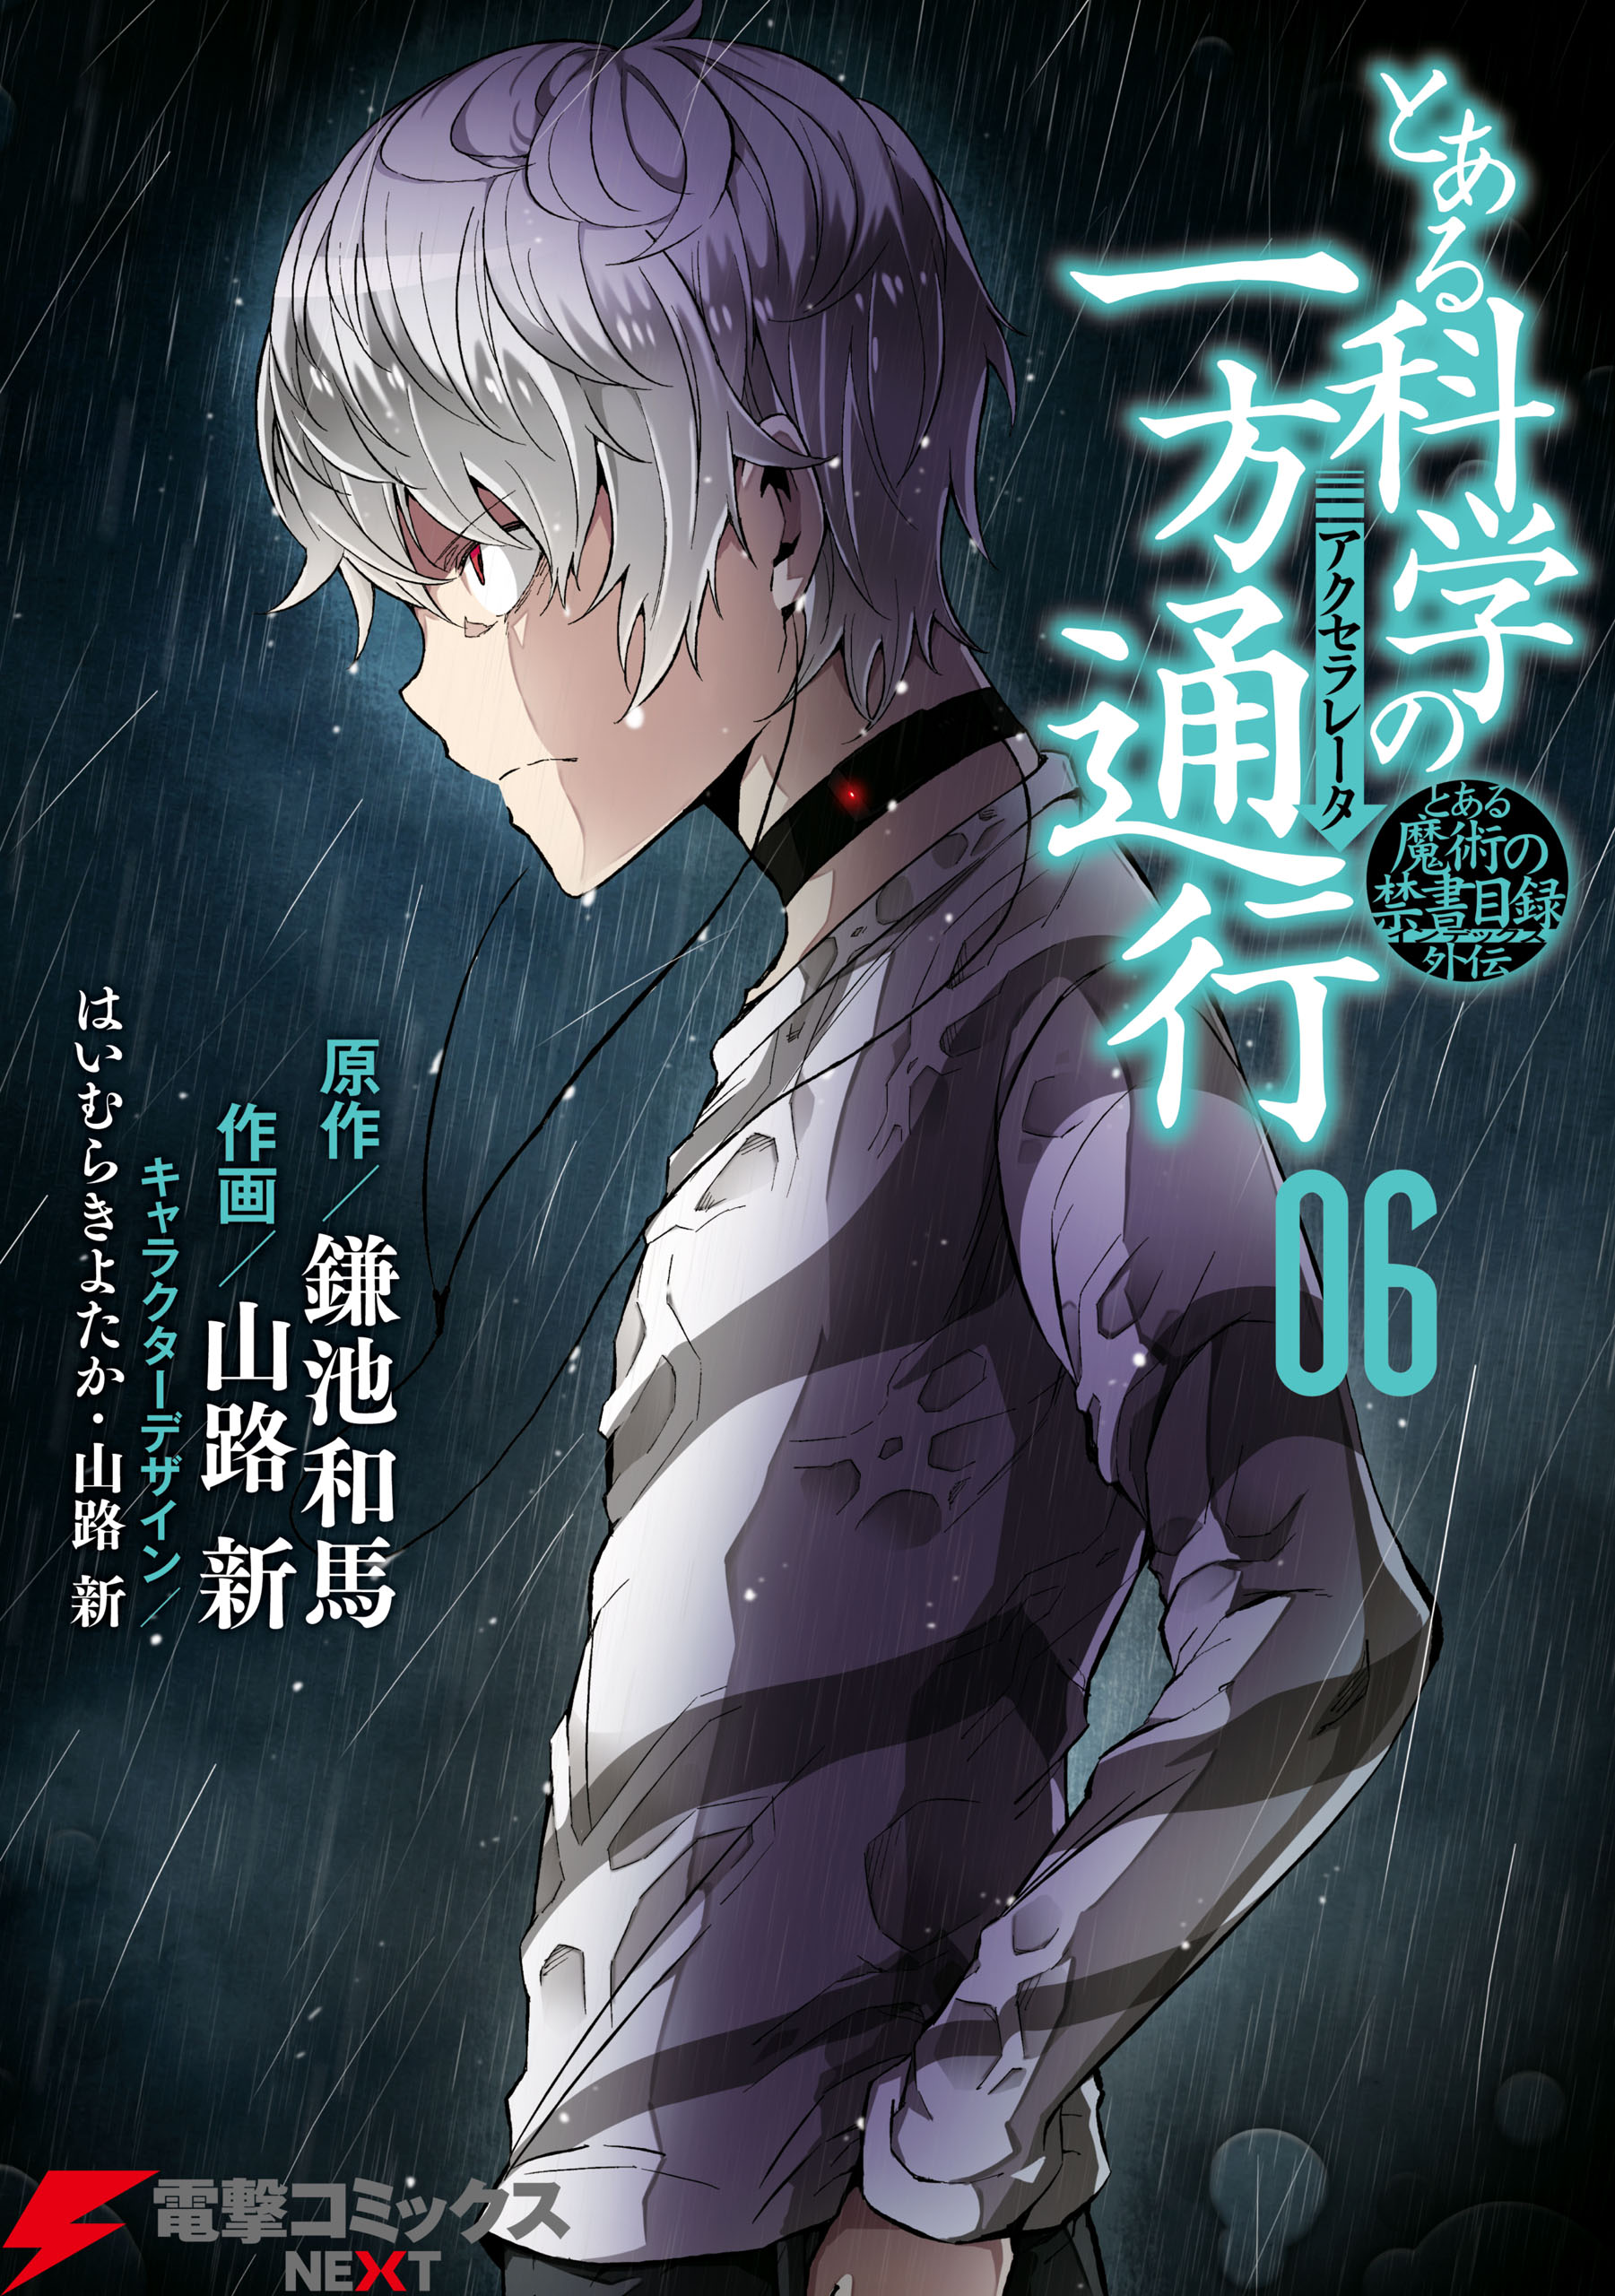 Toaru Majutsu no Index's Accelerator Gets His Own Manga (Updated) - News -  Anime News Network